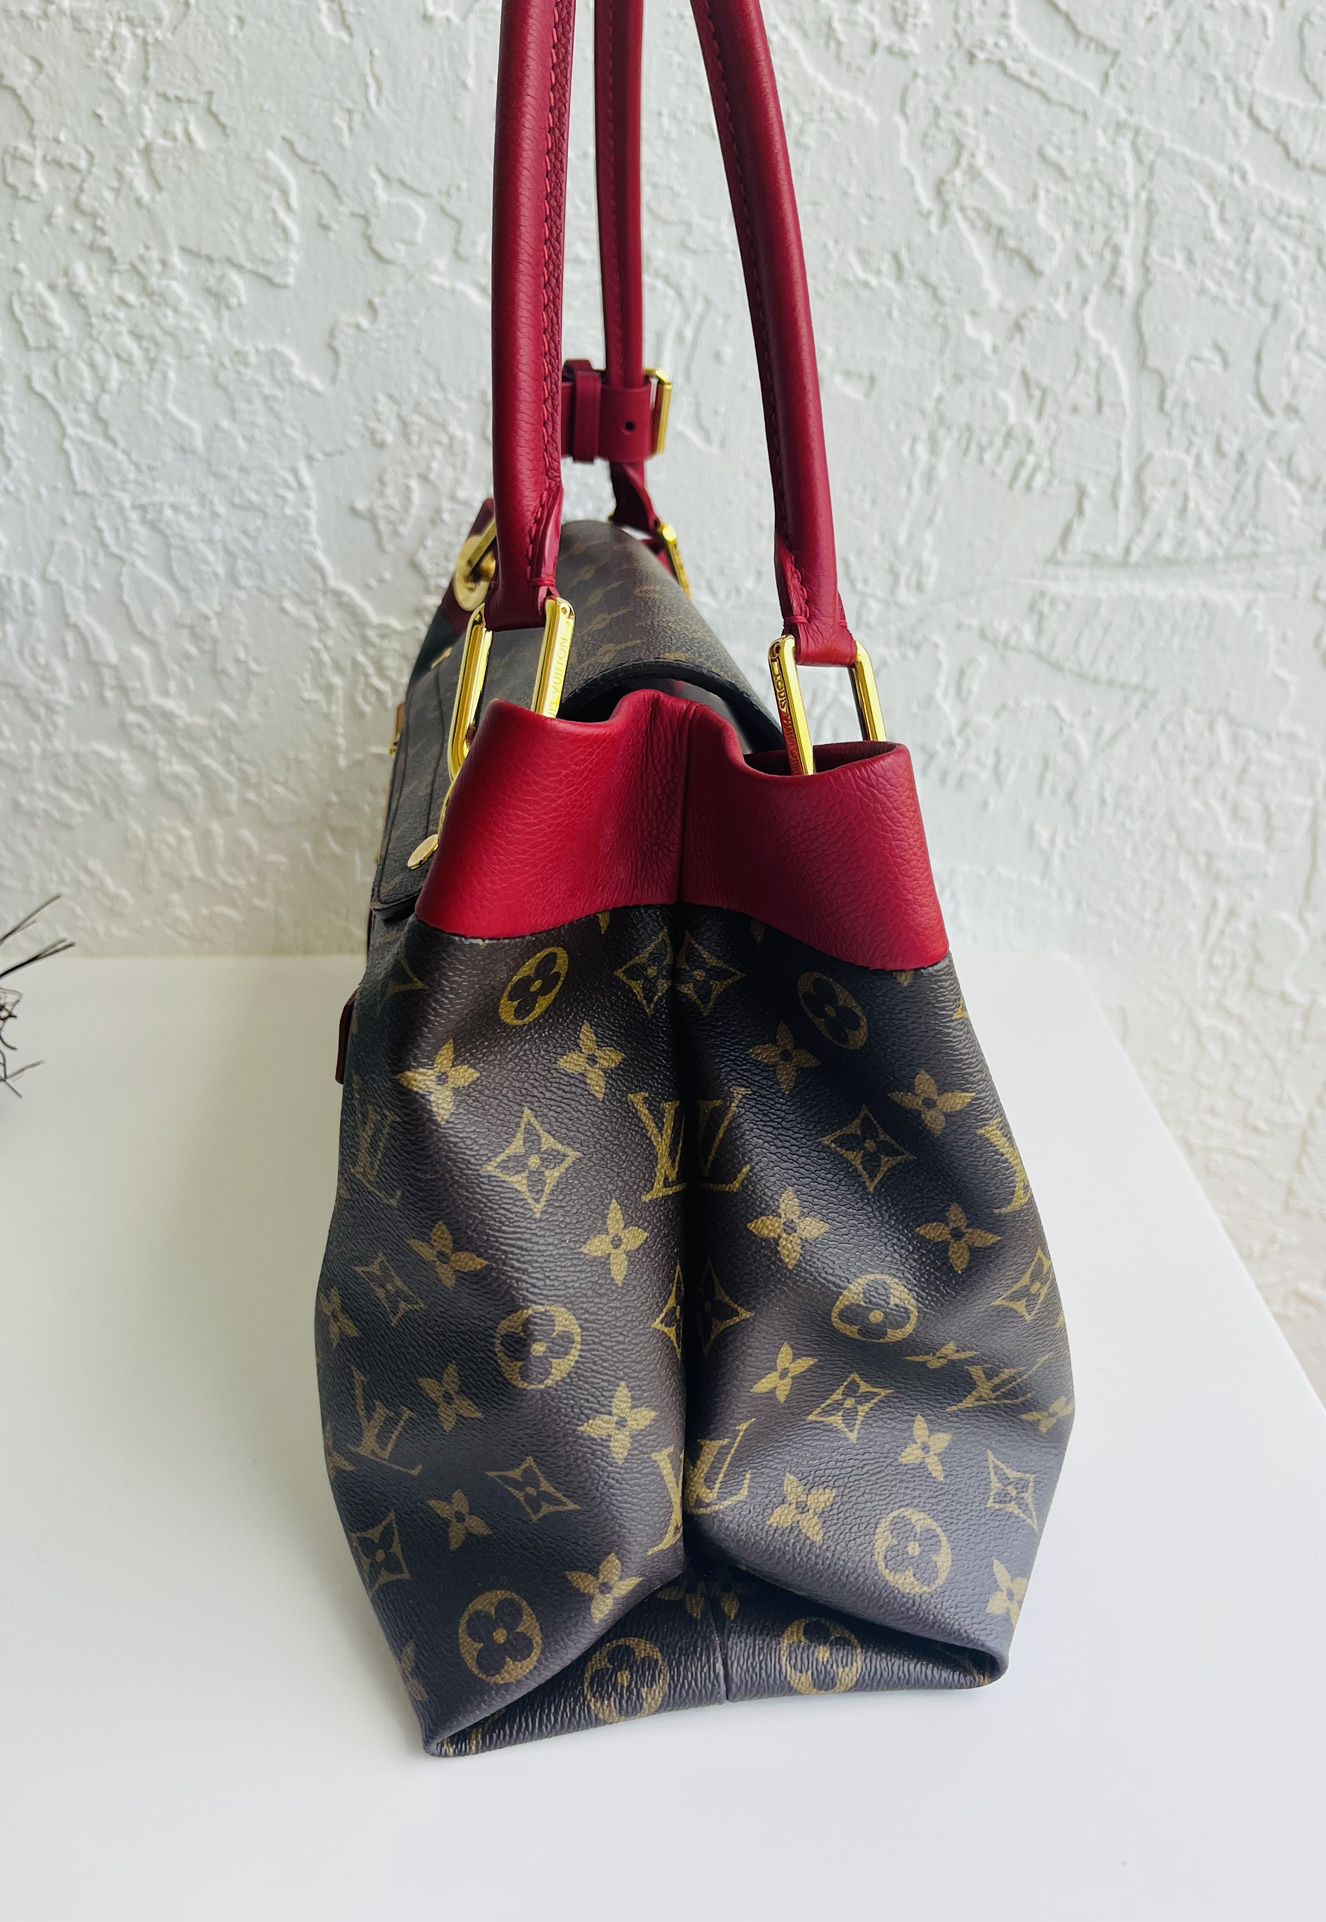 Louis Vuitton Sac Plat Tote Handbag - Vintage 80s! for Sale in Boca Raton,  FL - OfferUp